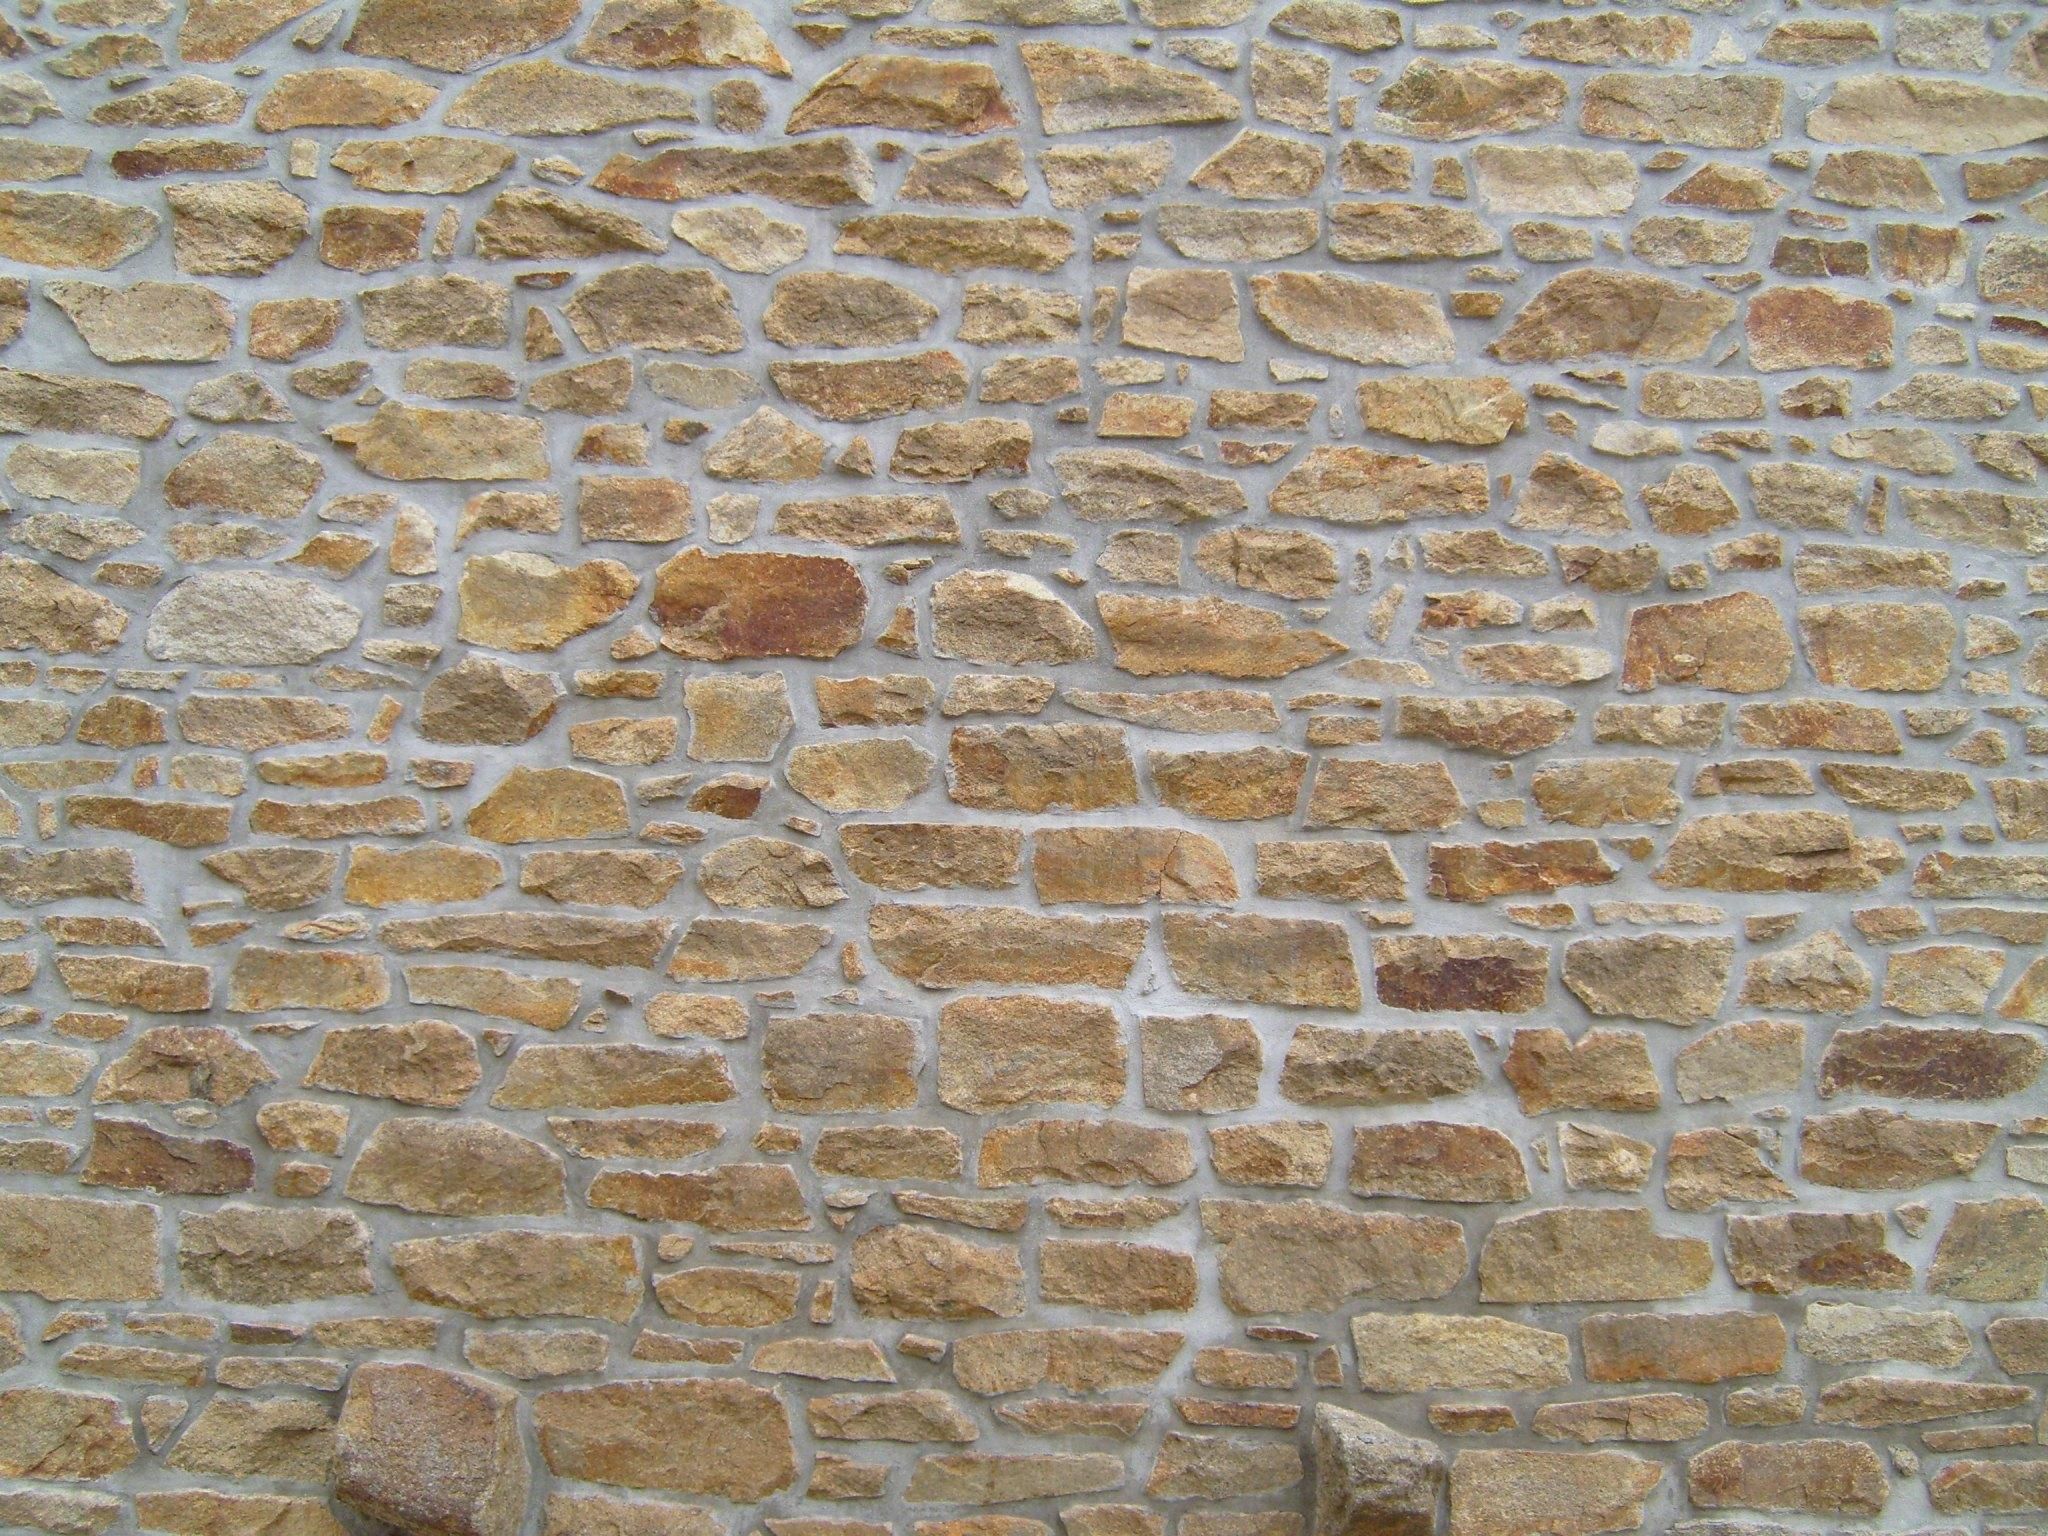 File:Old stone brick wall.jpg - Wikimedia Commons